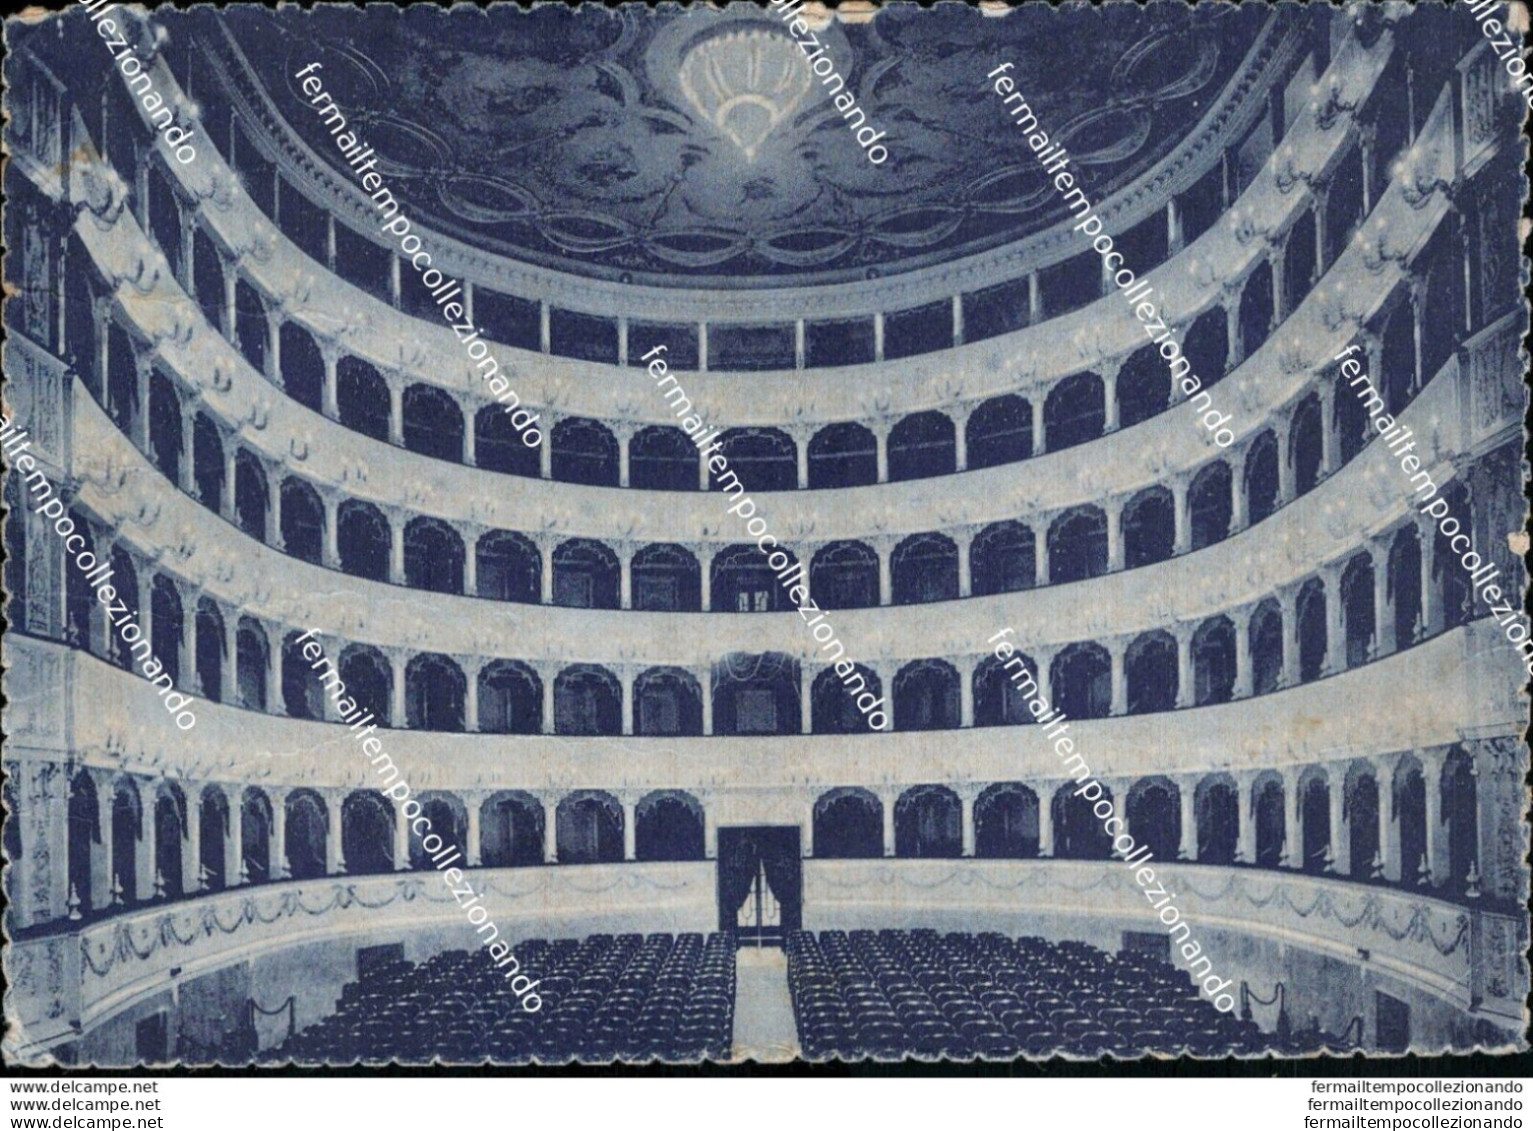 At344 Cartolina Pesaro Citta' Teatro Rossini - Pesaro